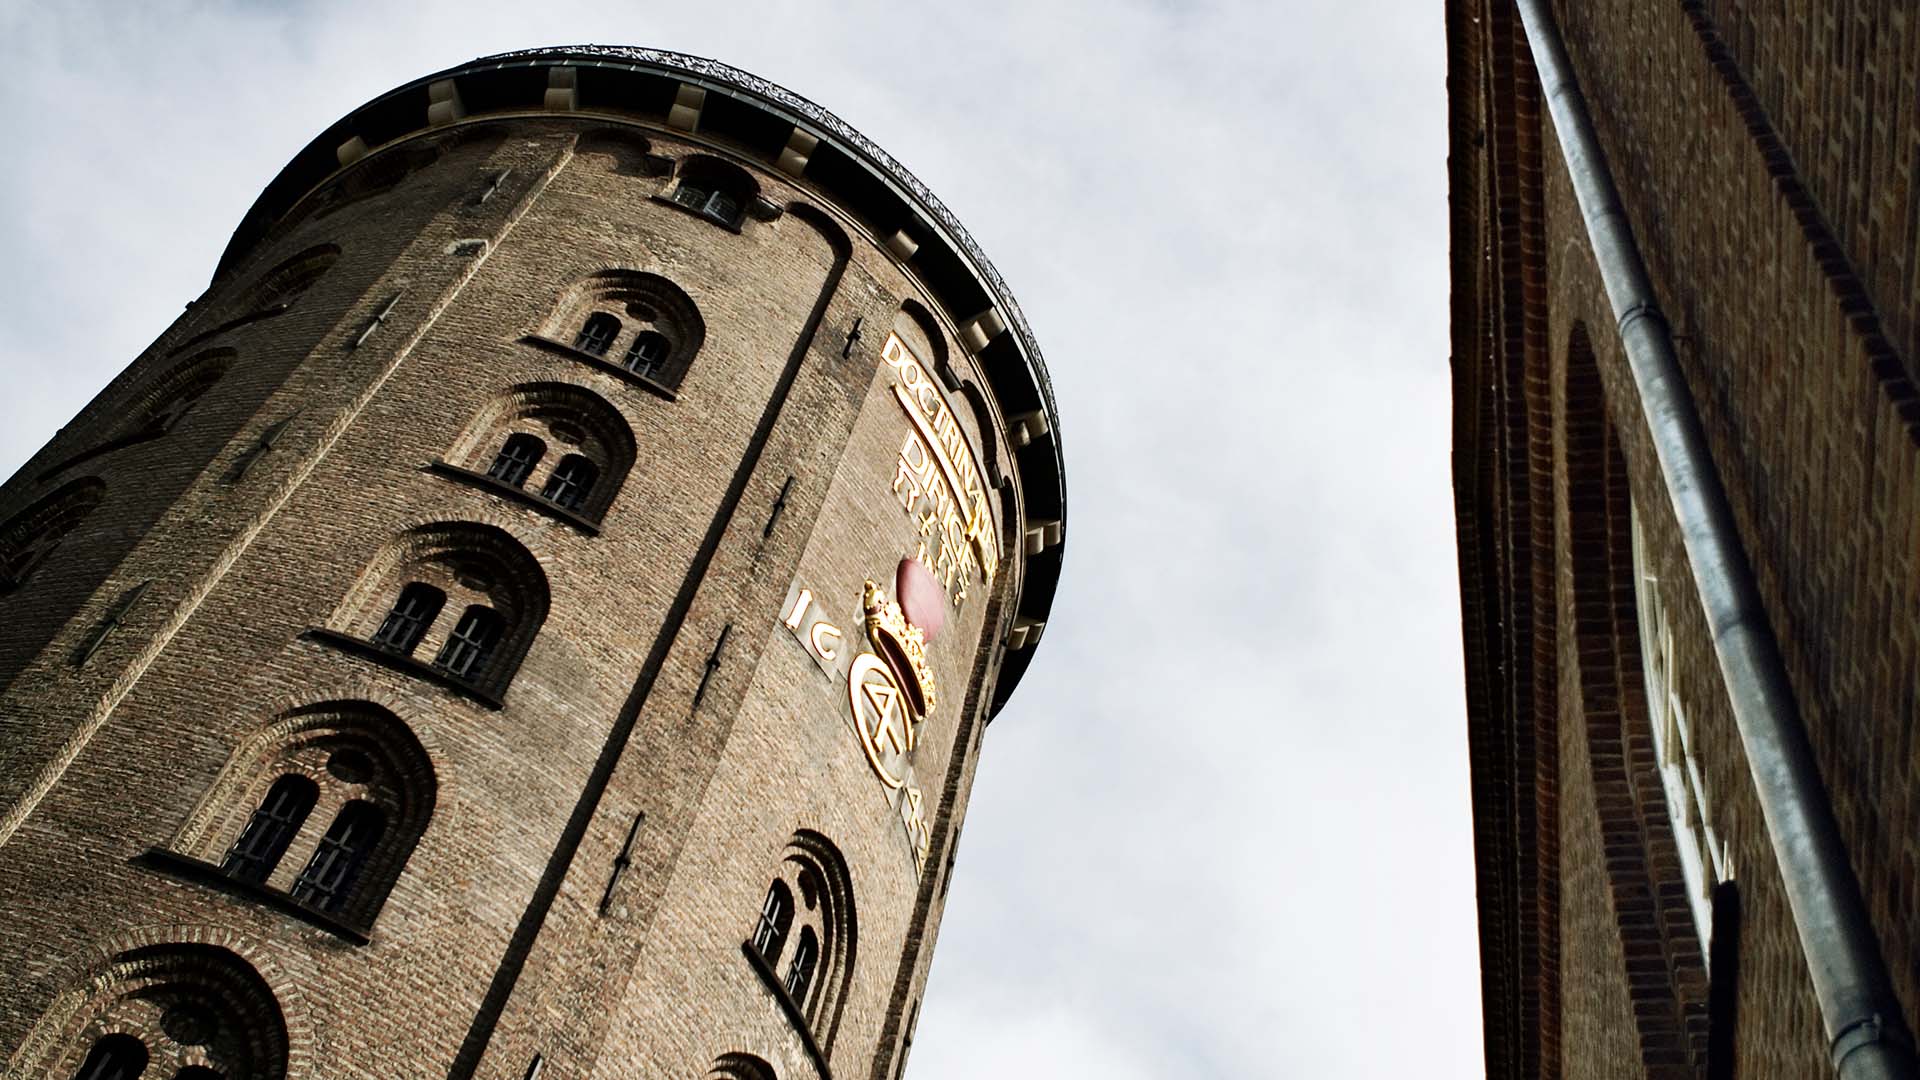 The Round Tower ©Morten Jerichau - copenhagenmediacenter